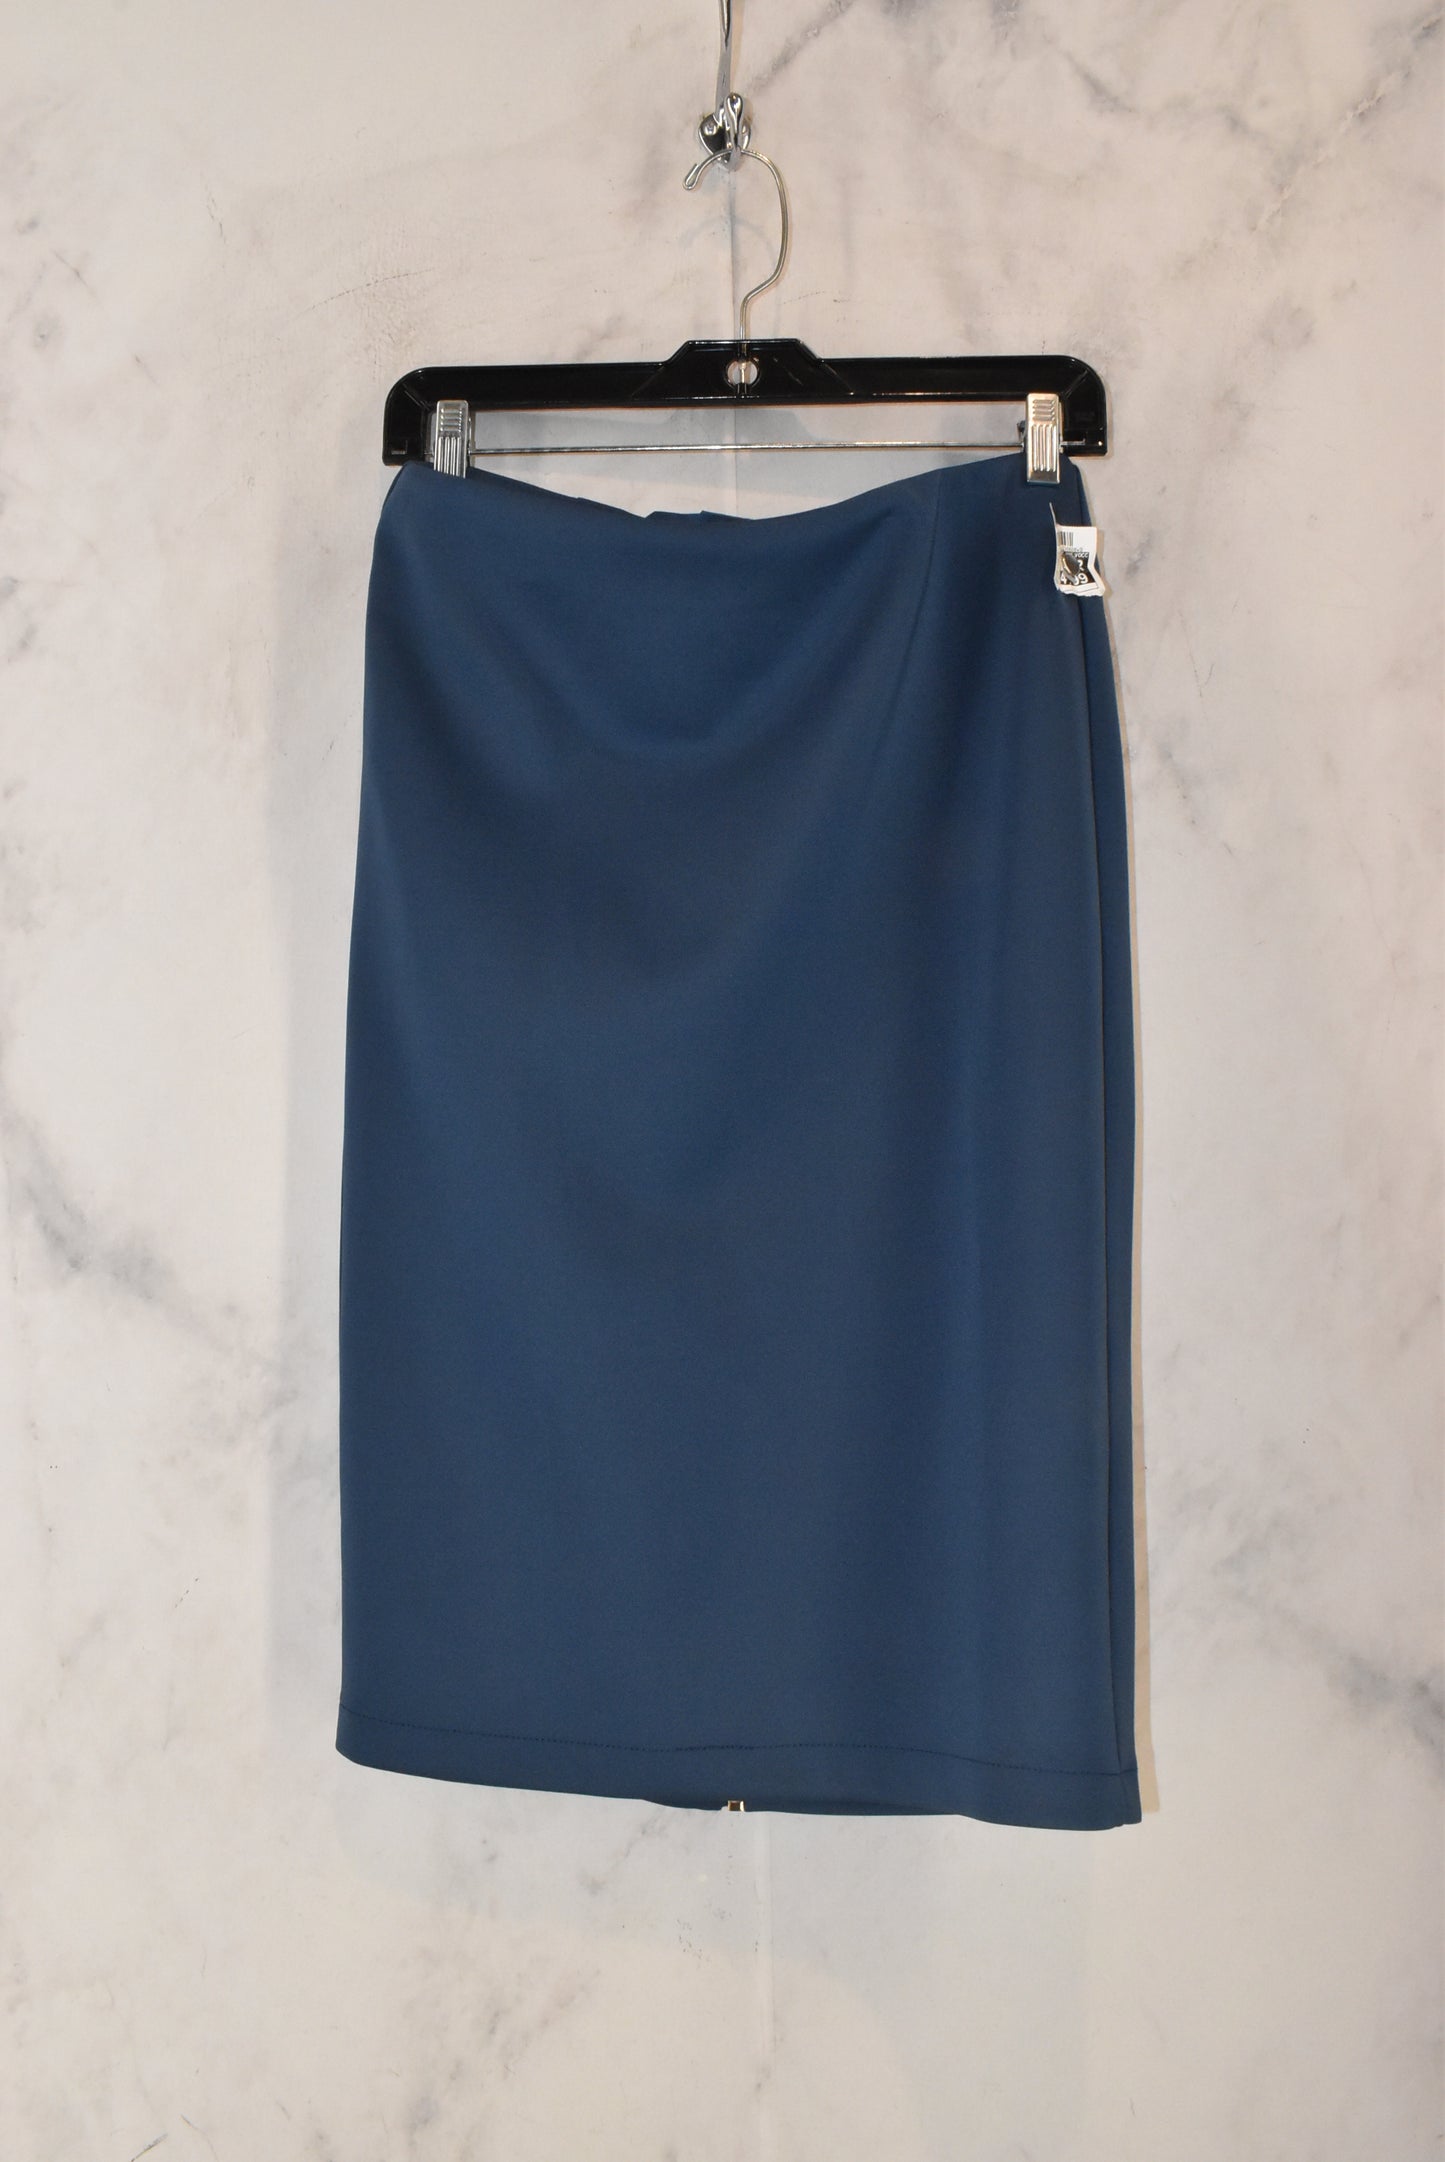 Skirt Midi By Carmen By Carmen Marc Valvo  Size: S